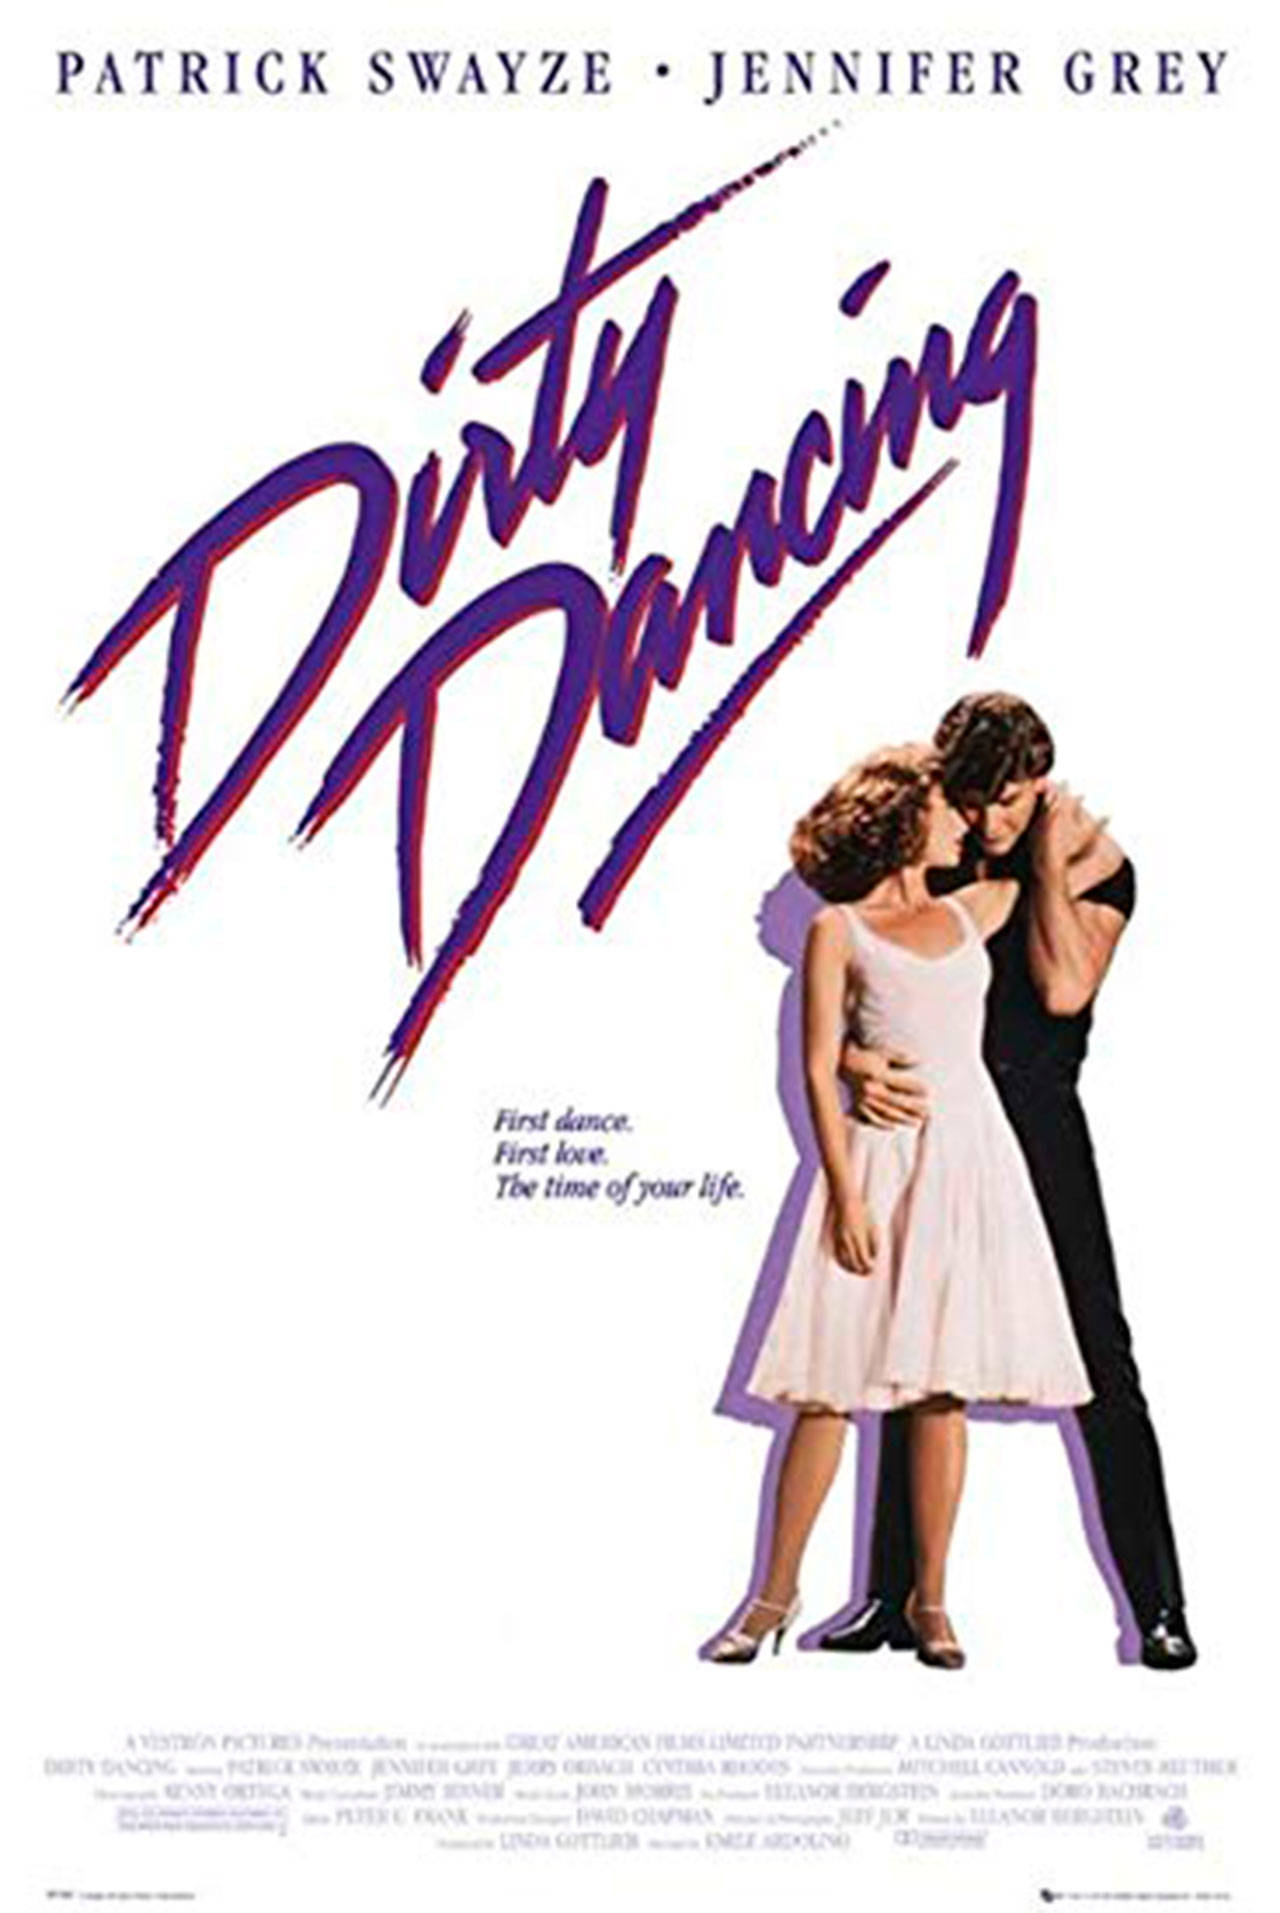 Image courtesy of Bainbridge Cinemas | “Dirty Dancing” (1987) returns to the big screen at Bainbridge Cinemas at 7 p.m. Wednesday, Feb. 13.